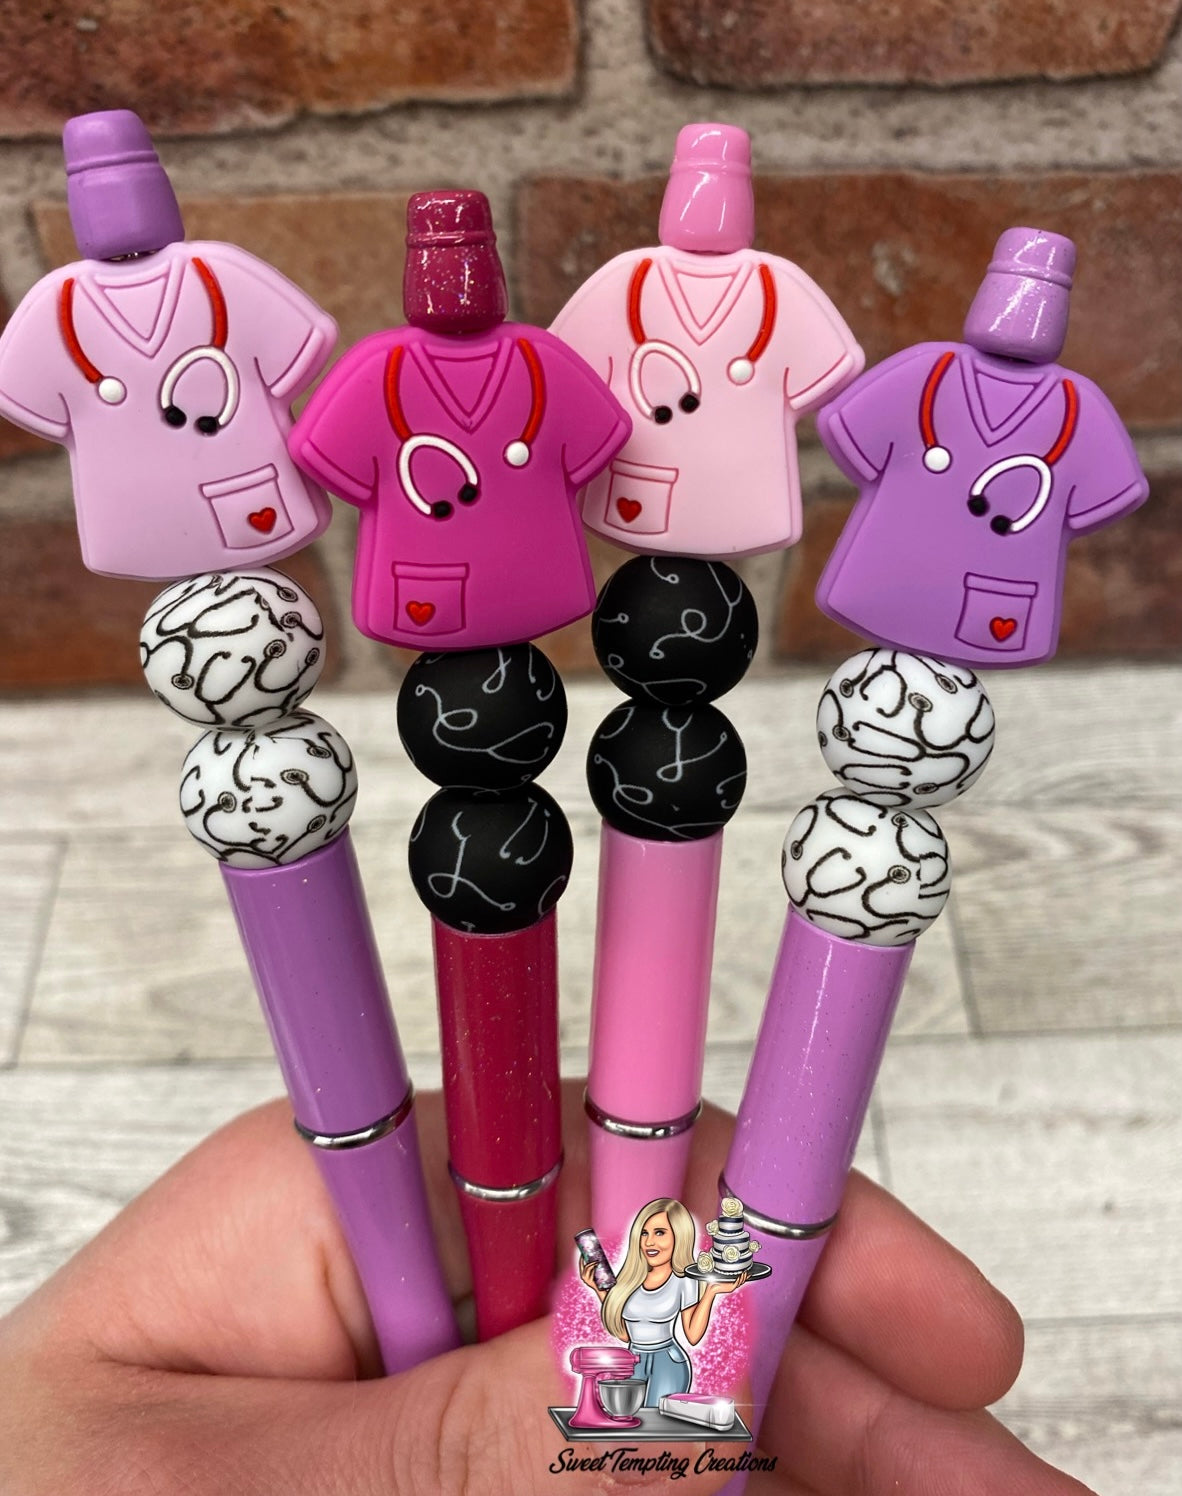 New Style/ DIY Multi-colored Ink Beadable Pens/ Craft Pens/ Nurse